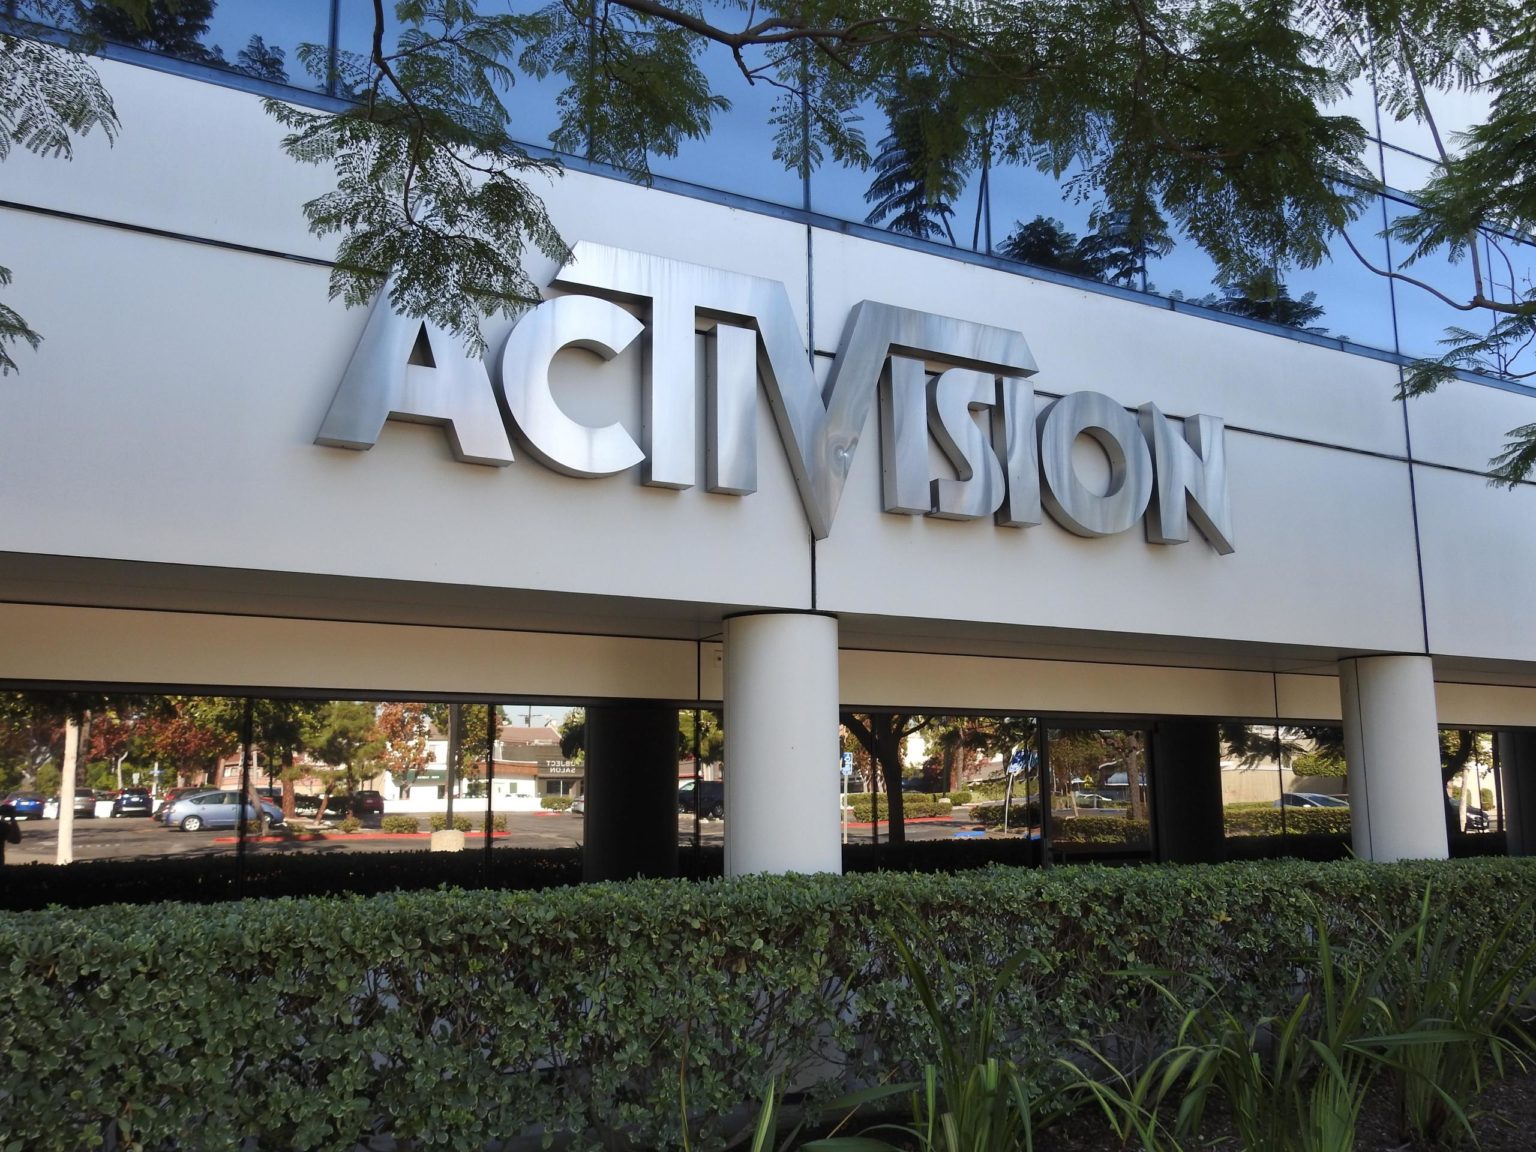 US senators write letter expressing concerns about Microsoft's acquisition of Activision Blizzard